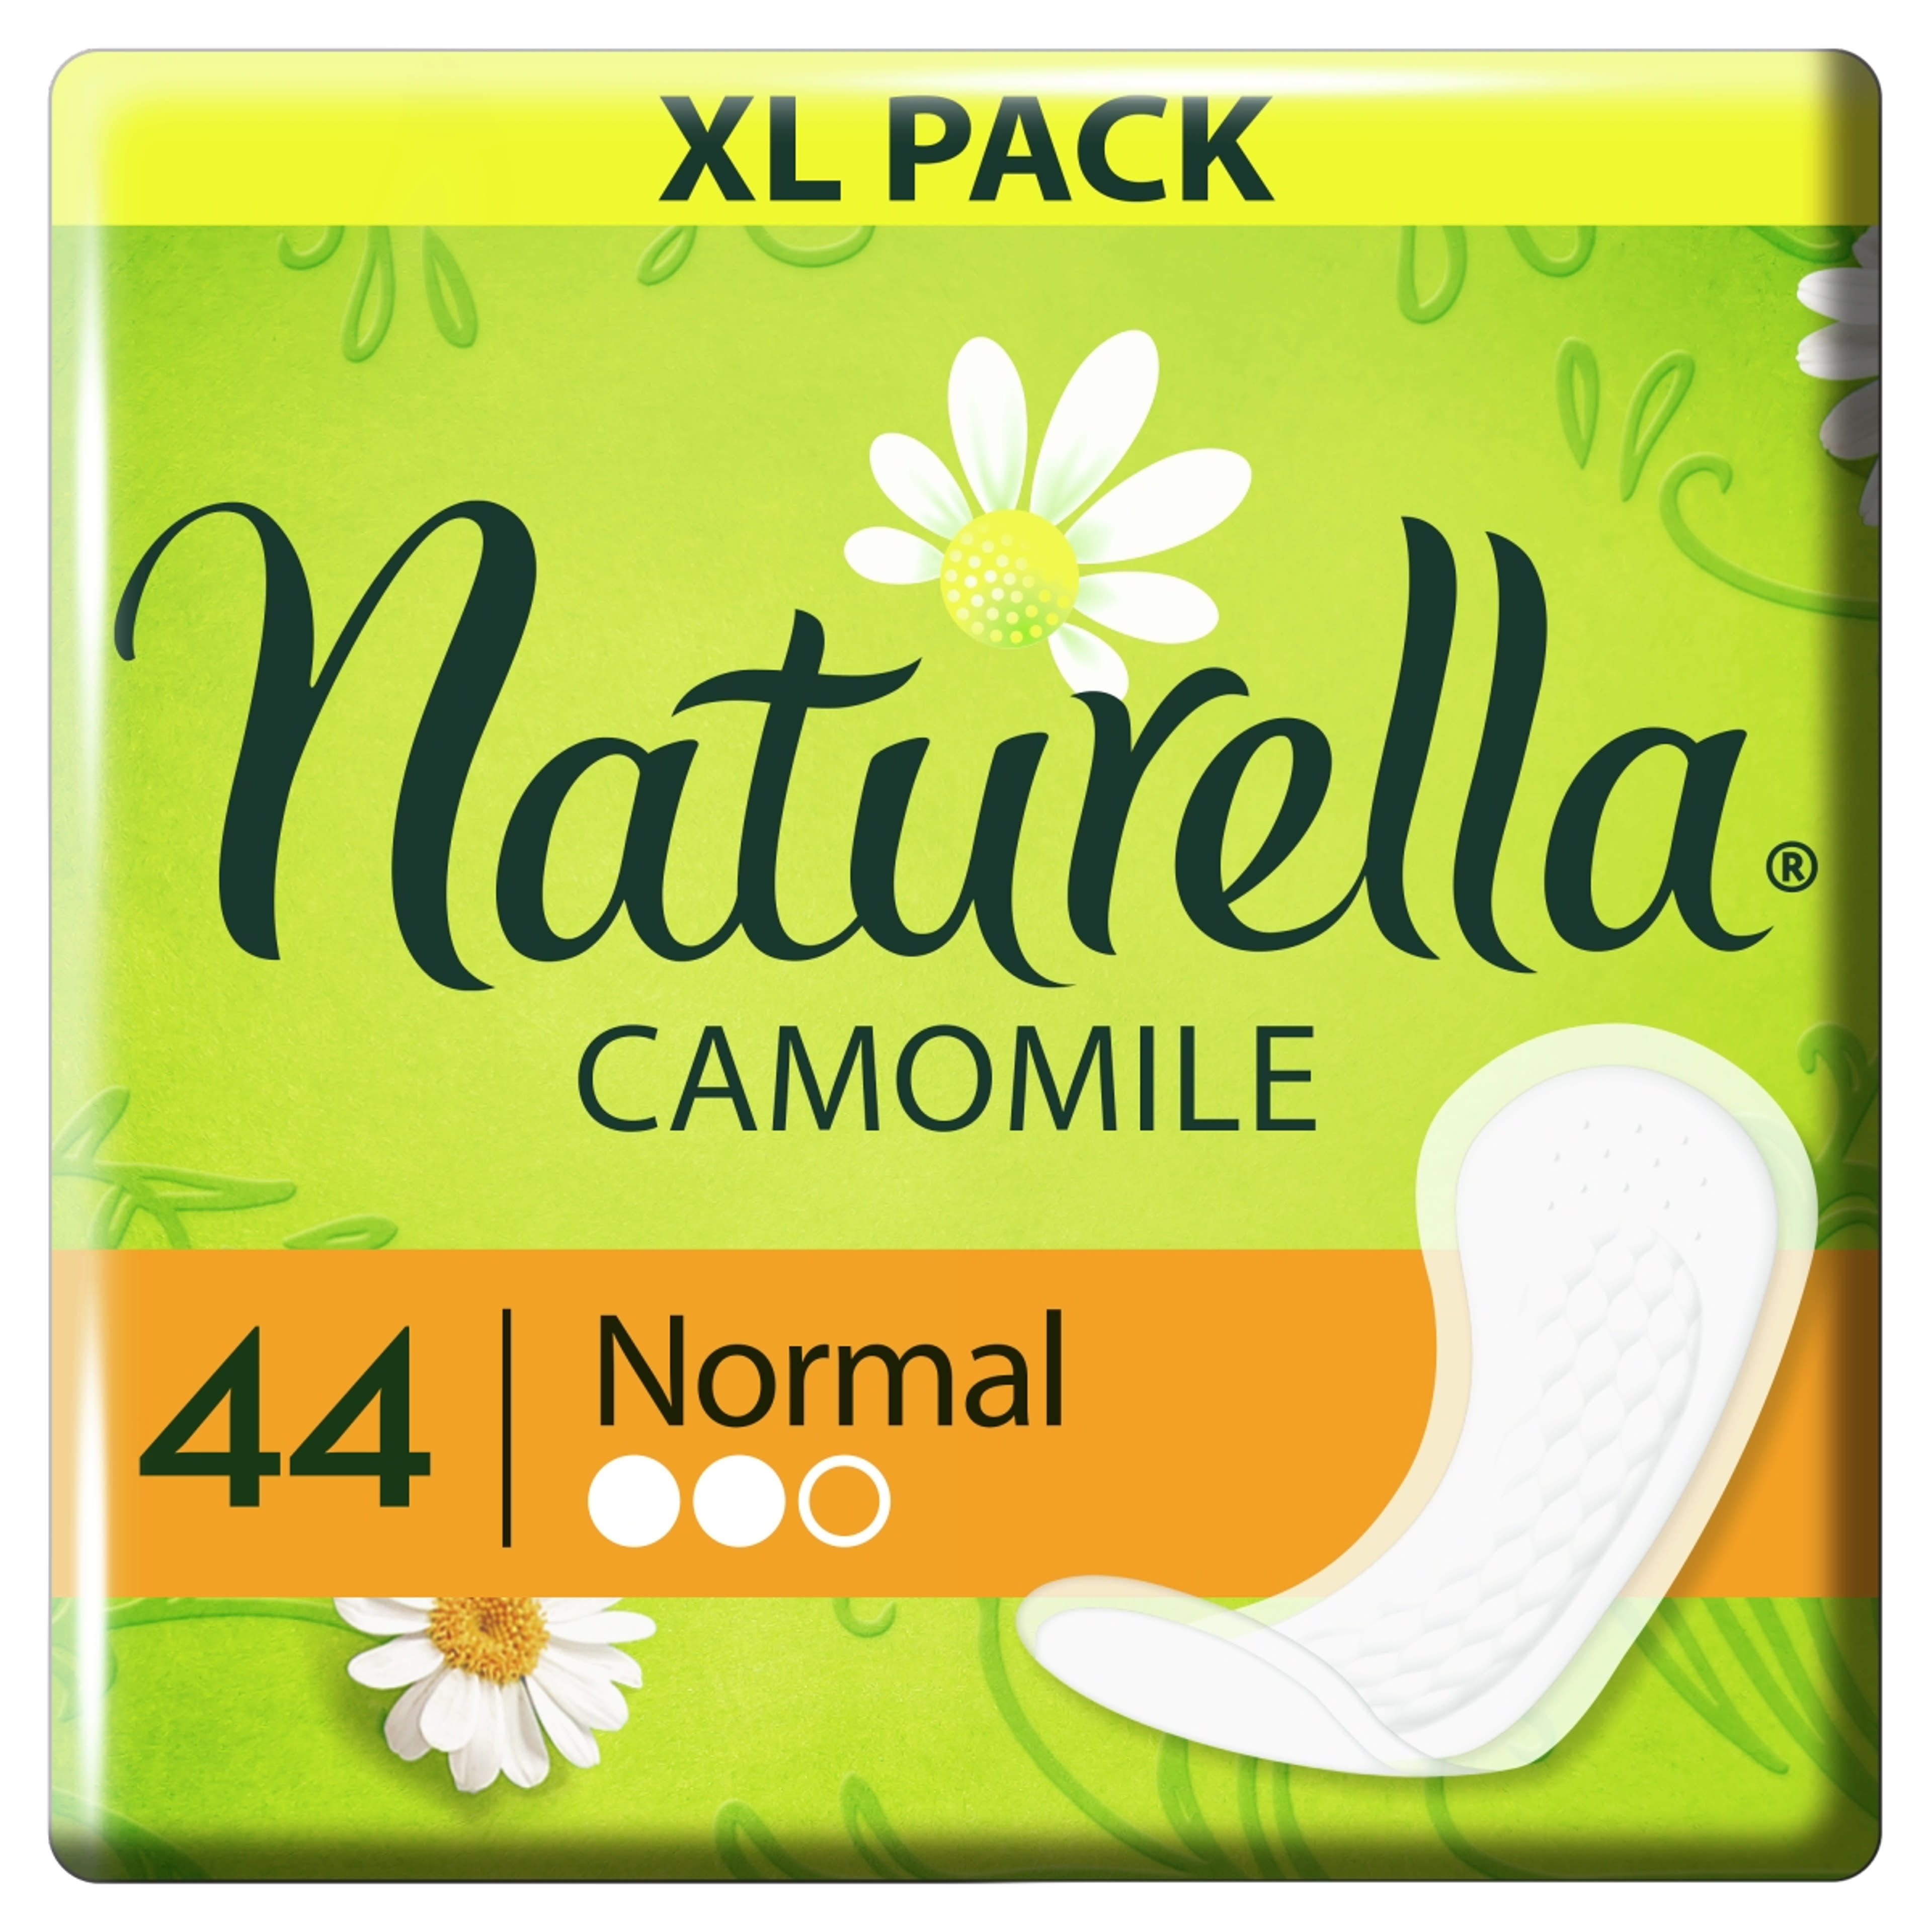 Naturella tisztasági betét regular chamomile - 44 db-2